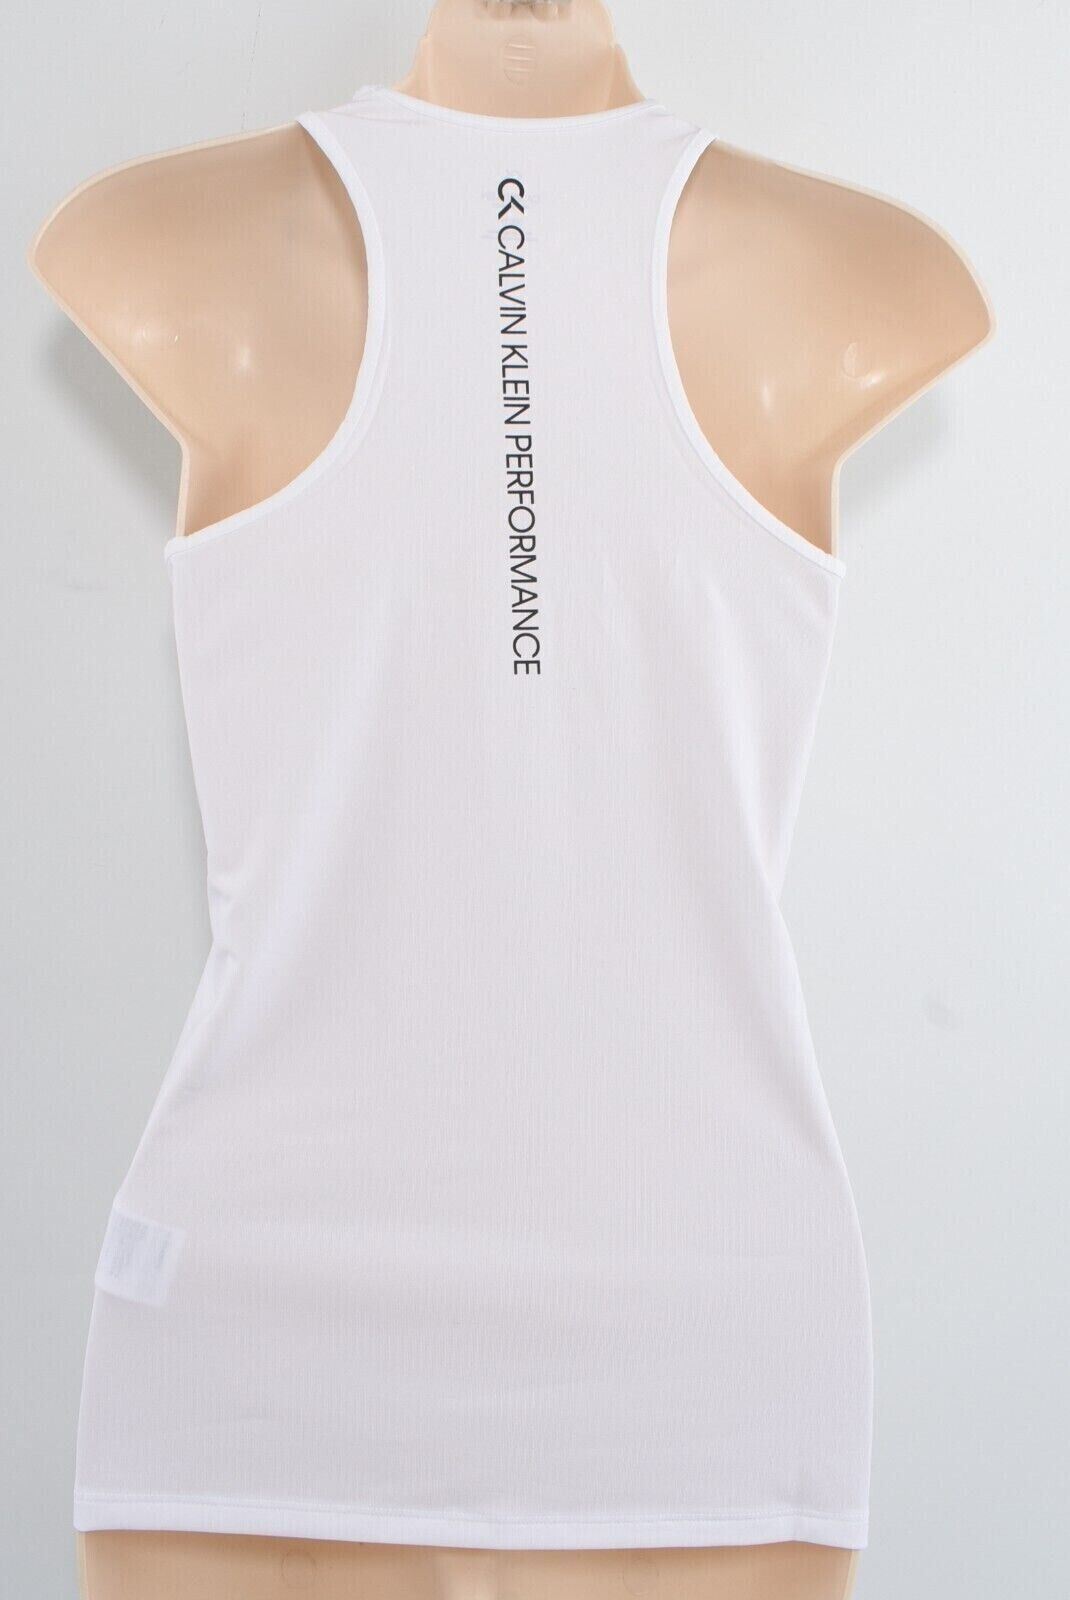 CALVIN KLEIN Performance: Women's Logo Tank Top, White, size L/UK 12